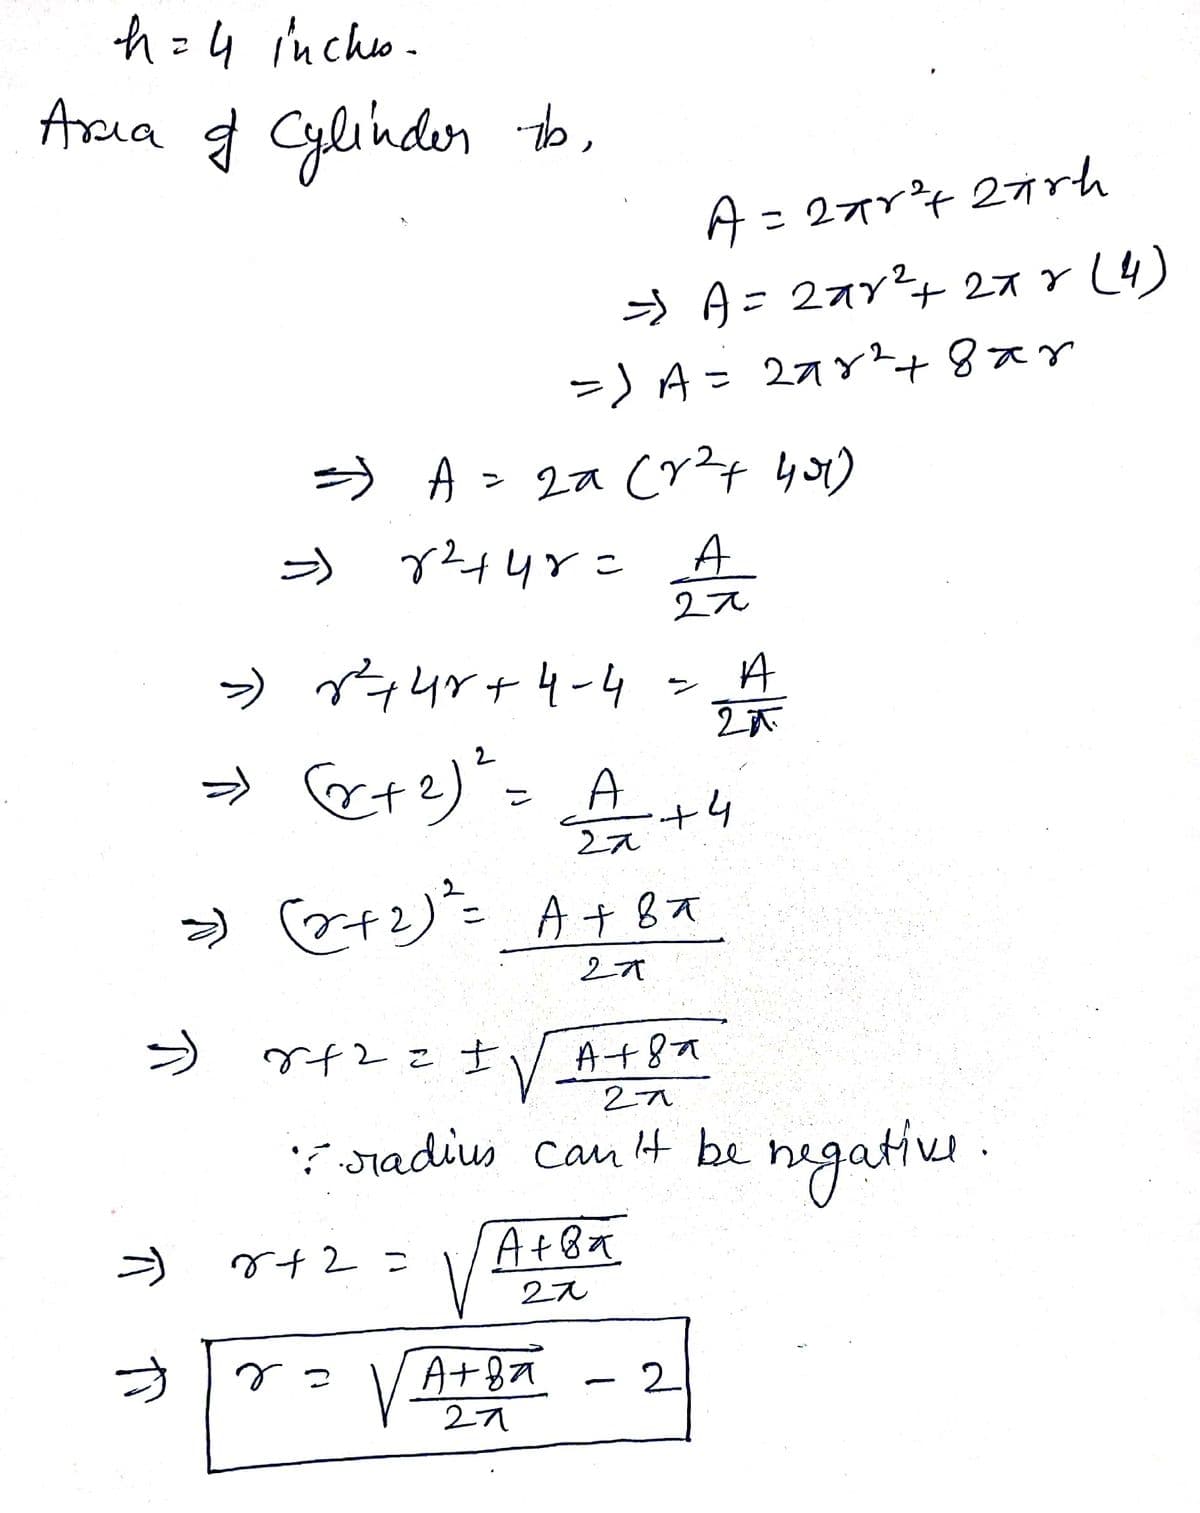 h = 4 incho .
Arsia g Cylihden
A= 277r4 27rh
うA= 27y?+ 27Y L4
it
%3D
ー)A= 27Y+8xY
%3D
う A> 2a Cy?t yo)
ア44Yこ
A
2え
→ ー4r+4ー4
A
ン
» et?)"= A
2え
2オ
42こ士
A+8a
'? radius cau t be negative .
hegatiu .
A+8a
2え
r+2=
う
rっ
A+8
2
